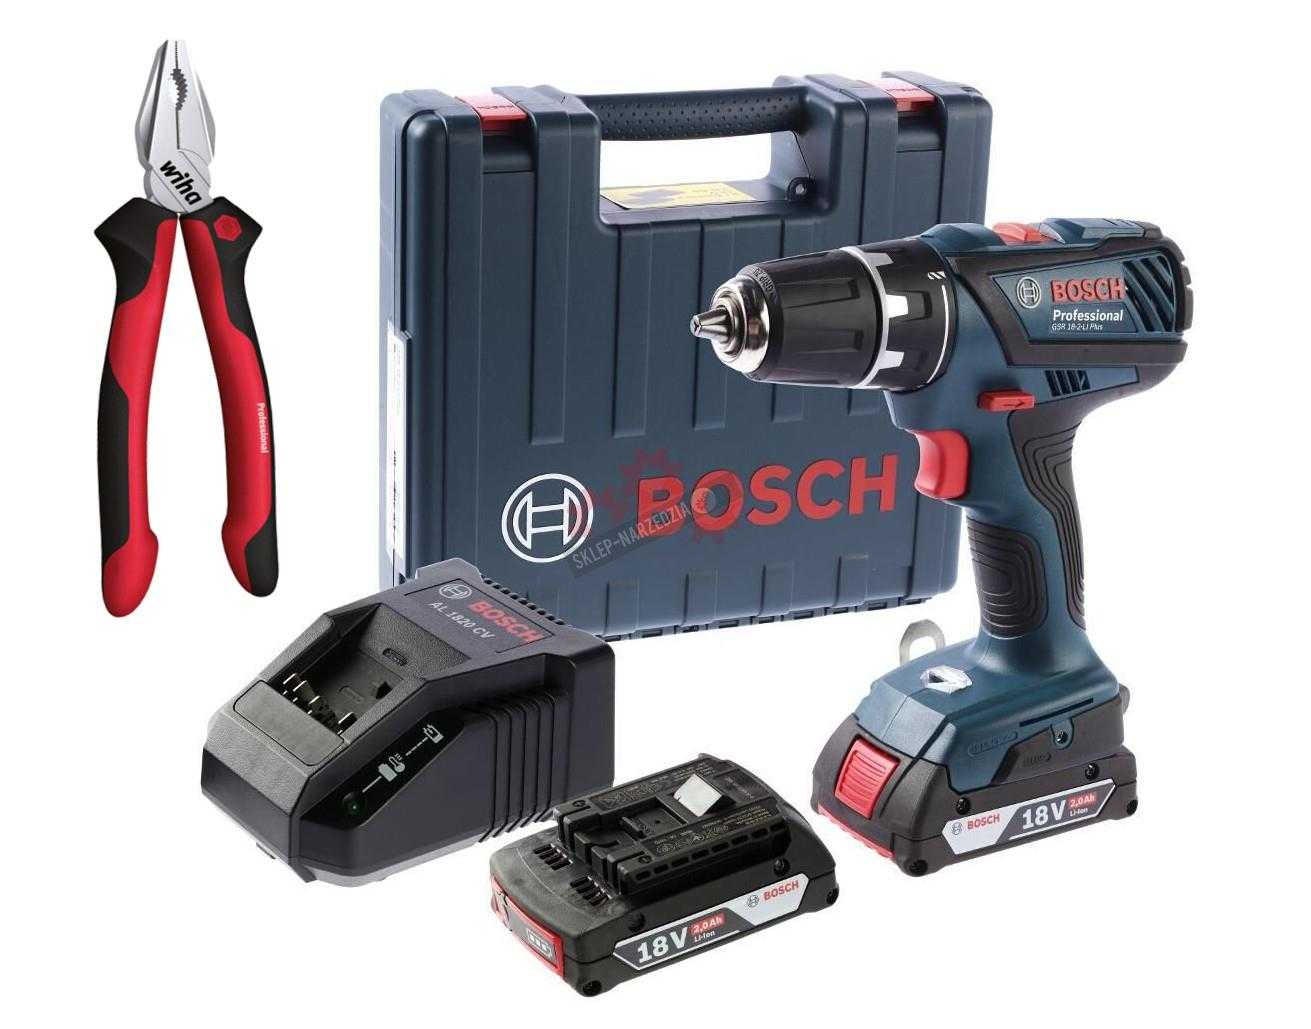 Bosch gsb 180-li 1.5ah x2 case отзывы